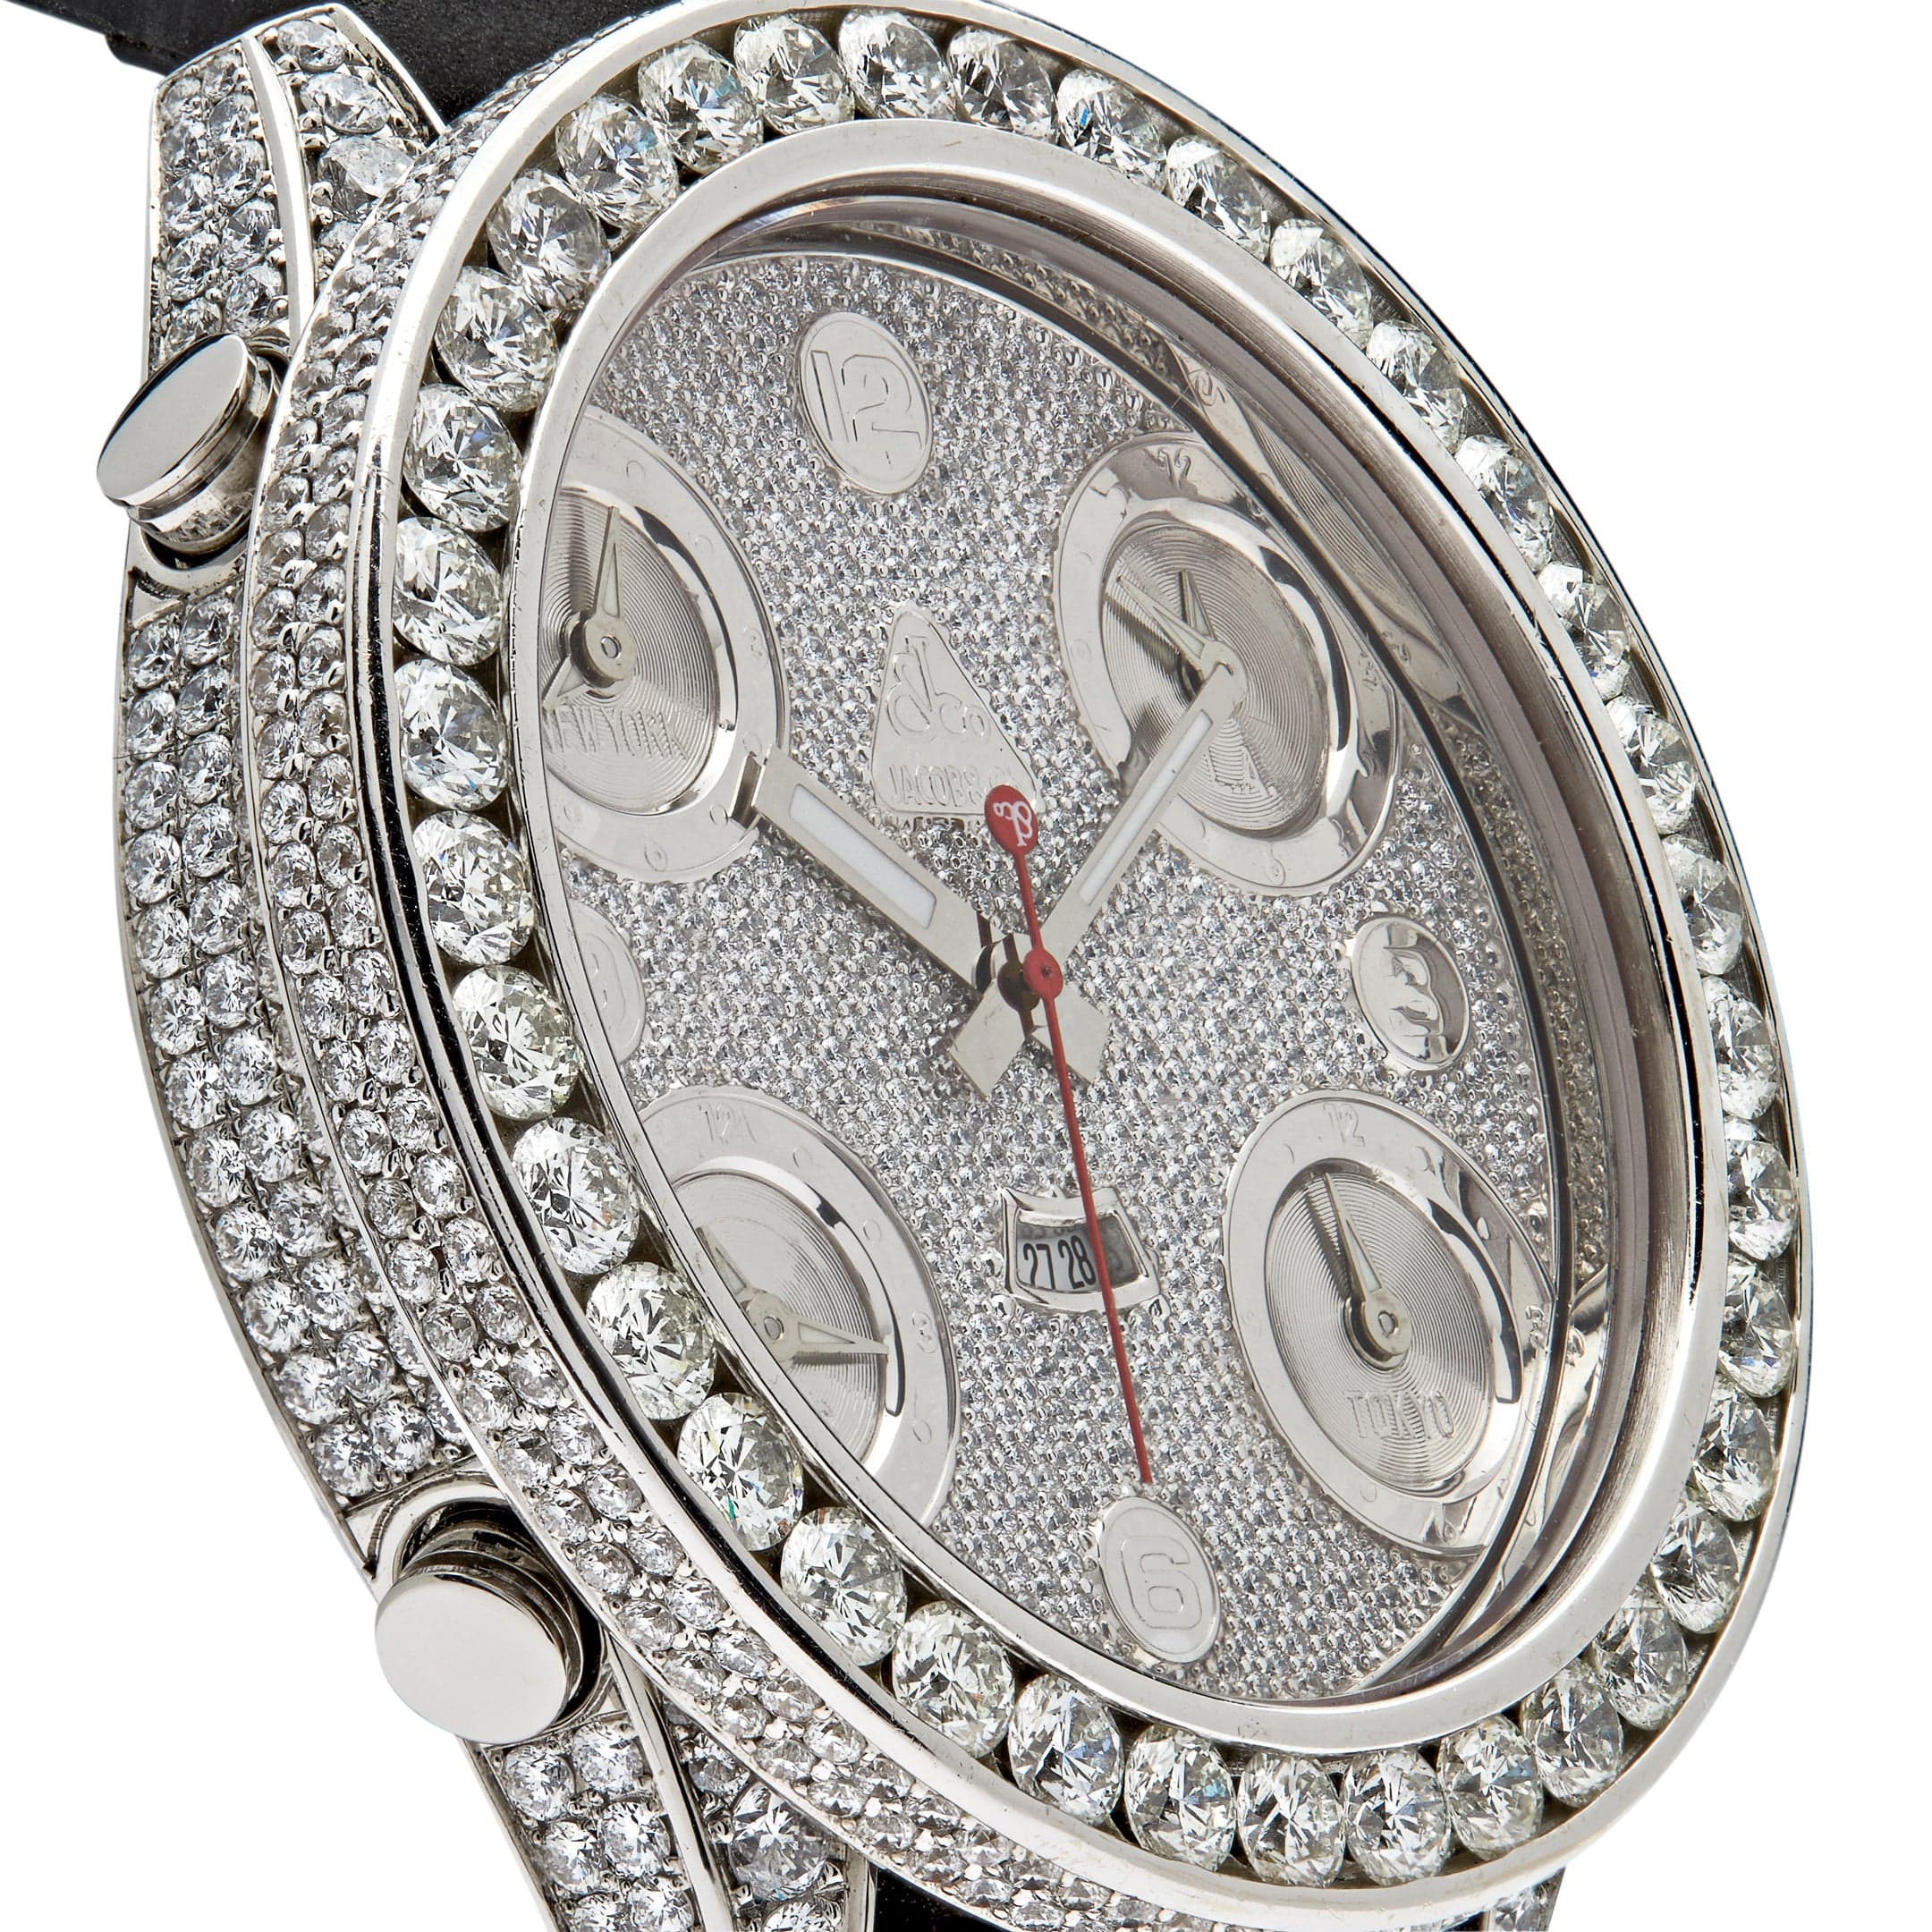 Jacob & Co. Five Time Zone 40mm Steel Diamond Watch JCM-30